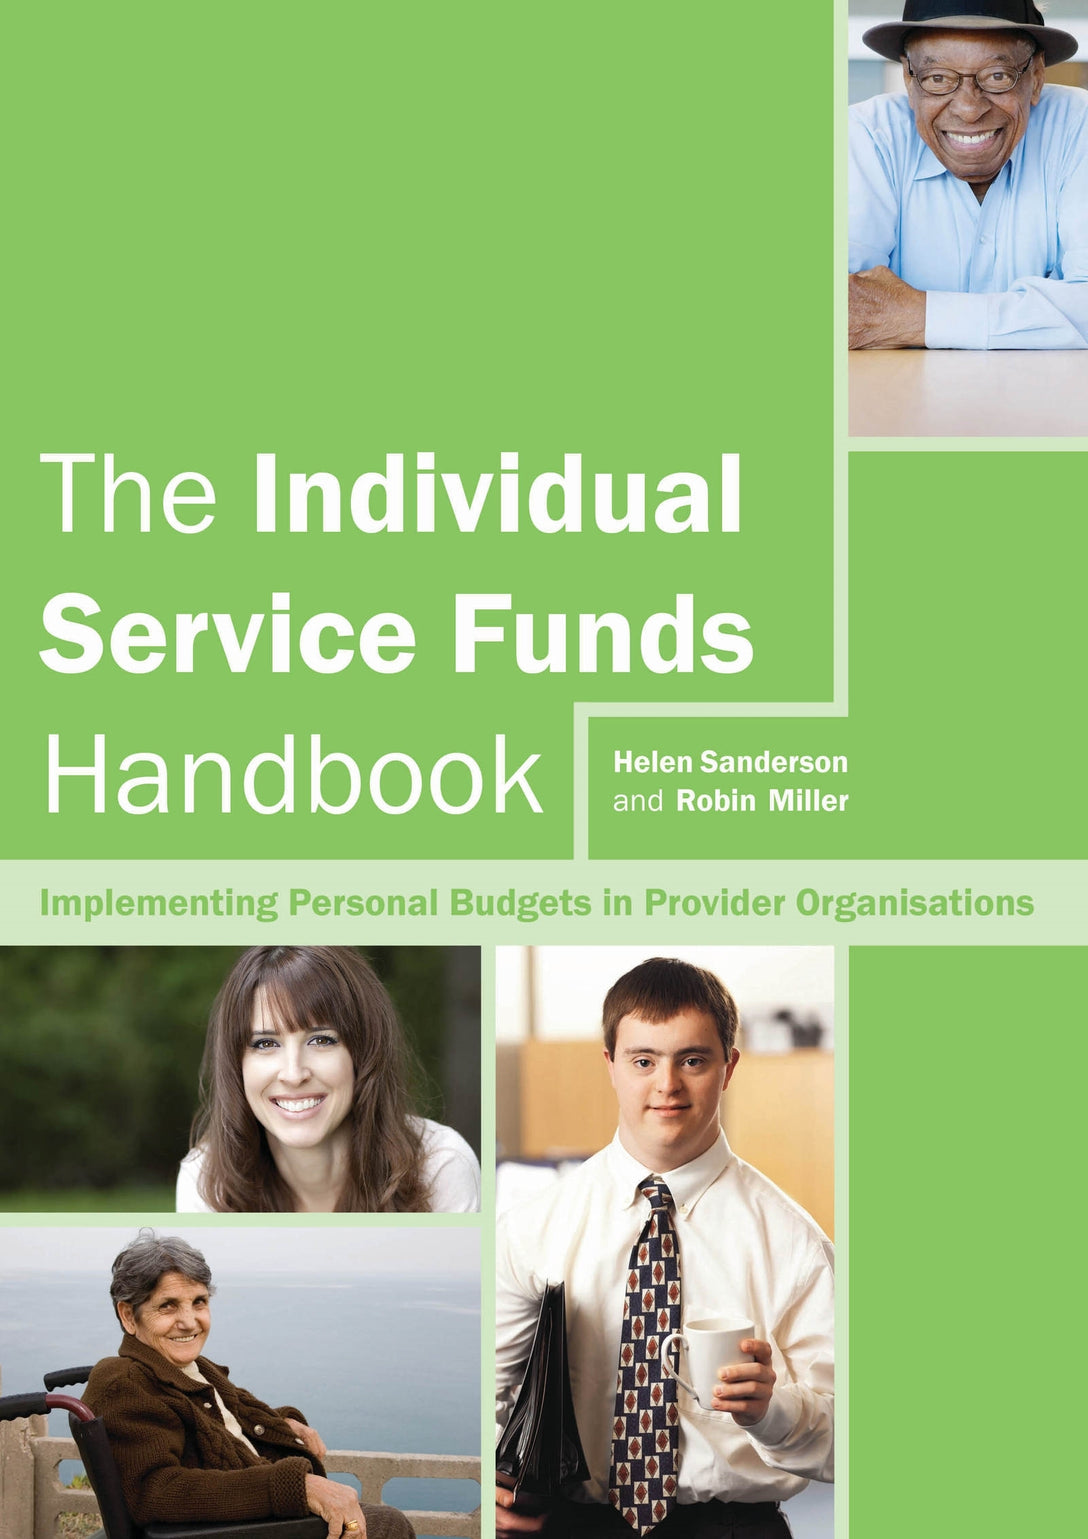 The Individual Service Funds Handbook by Helen Sanderson, Robin Miller